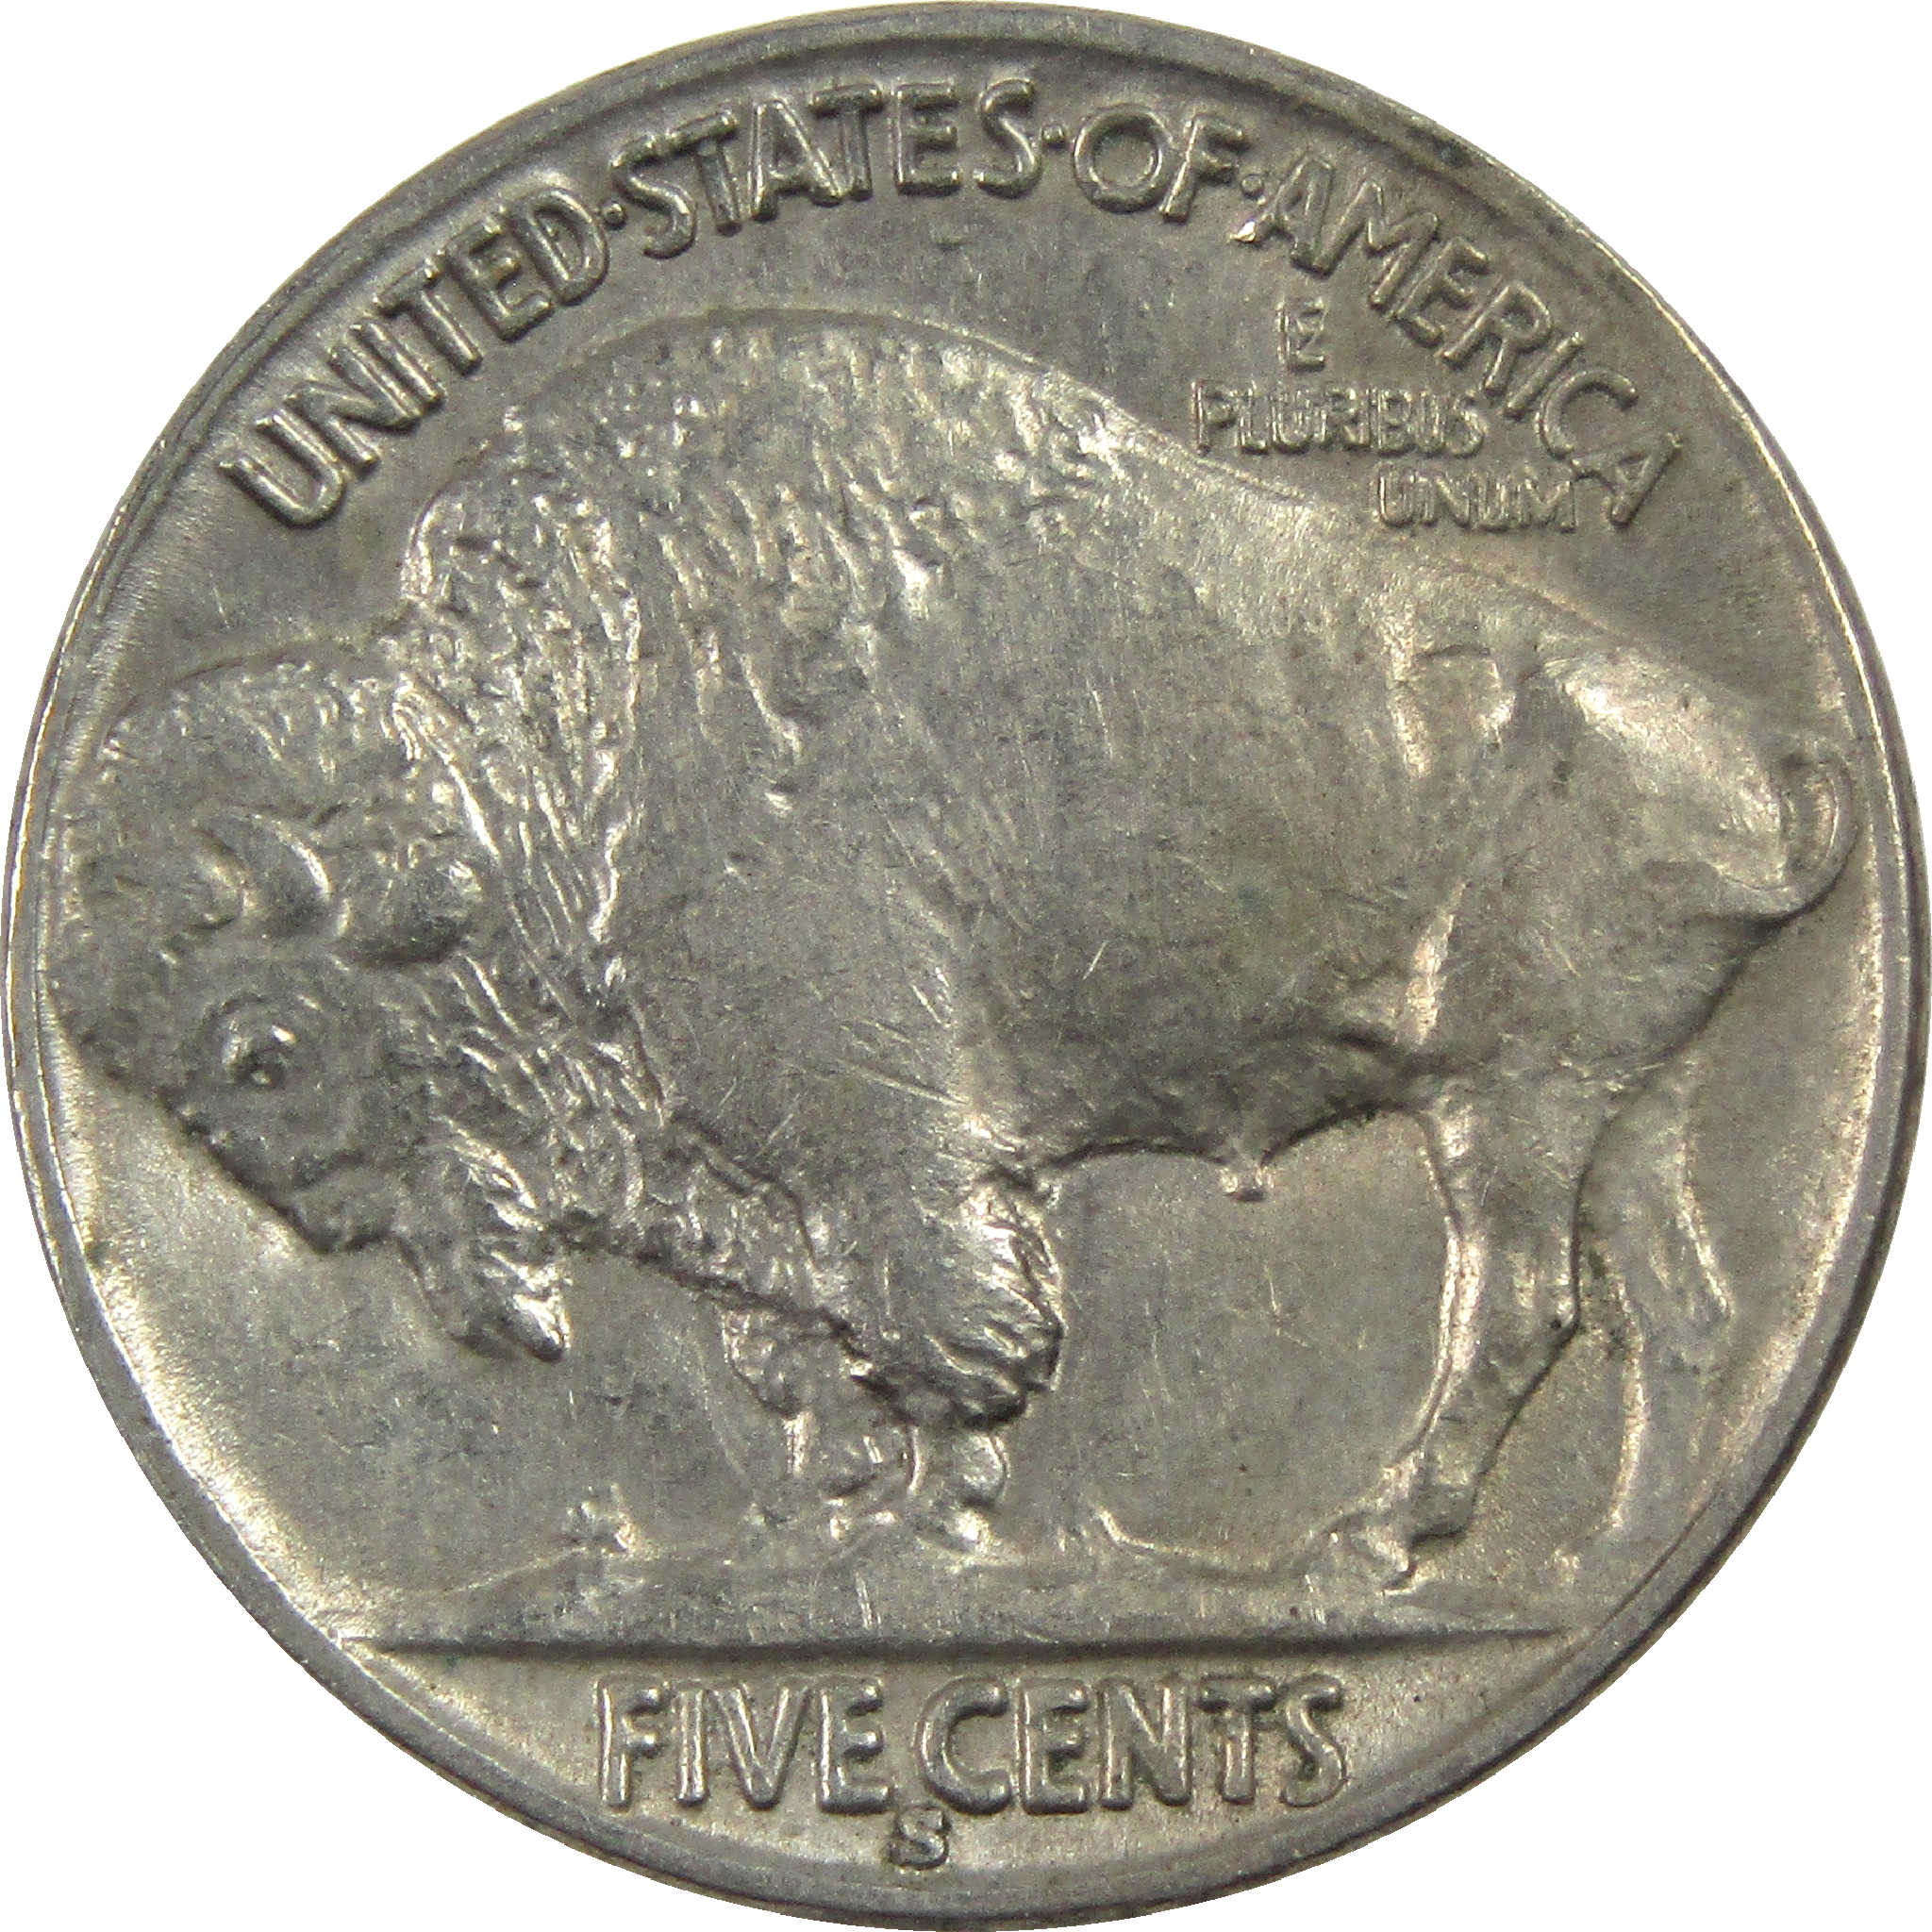 1931 S Indian Head Buffalo Nickel AU About Uncirculated 5c SKU:I11823